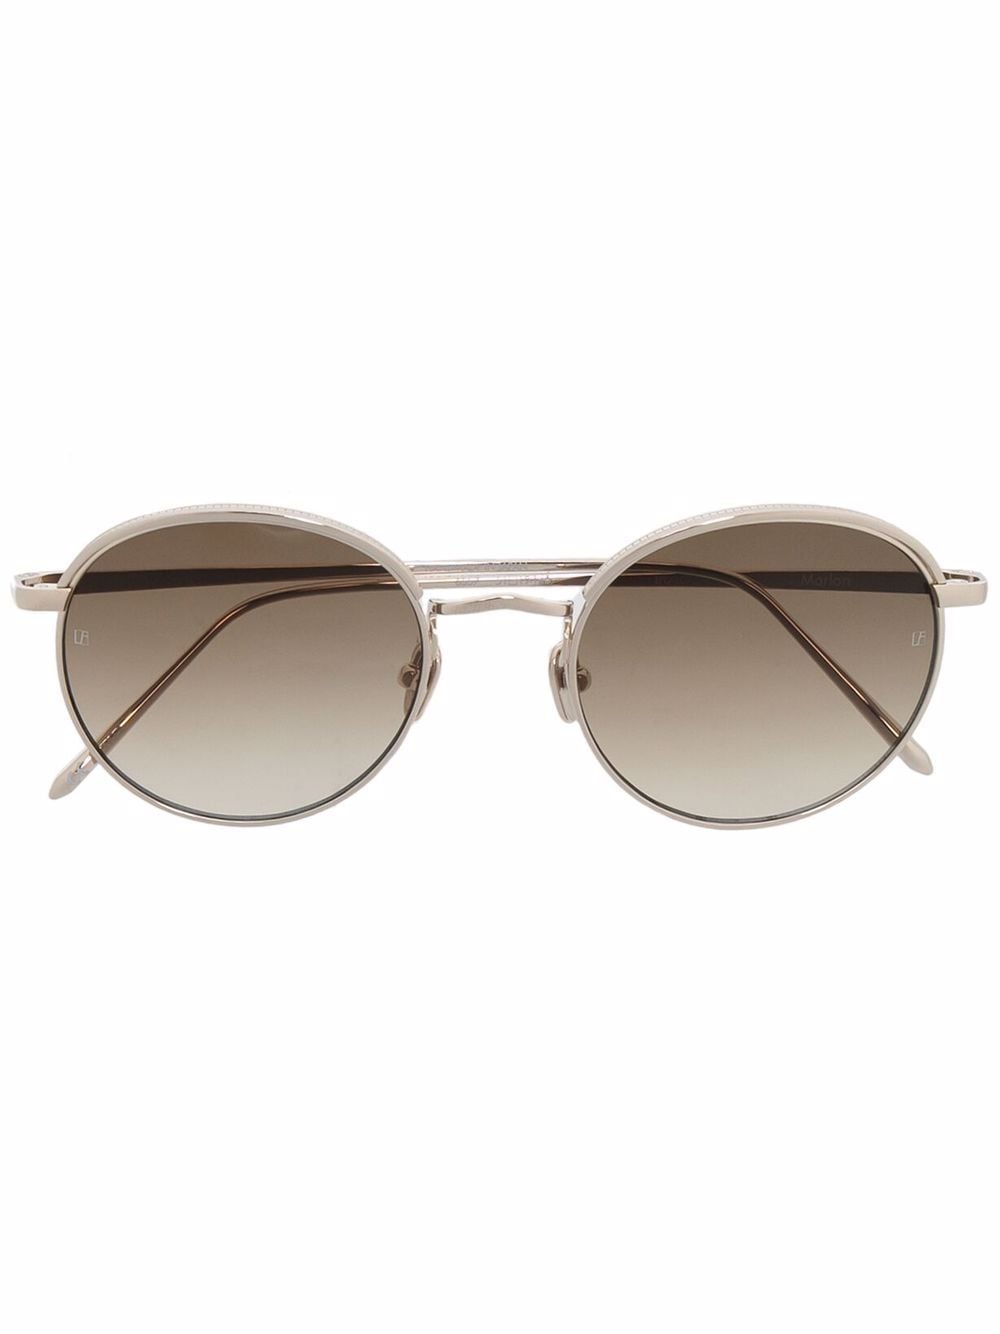 Linda Farrow tinted round-frame sunglasses